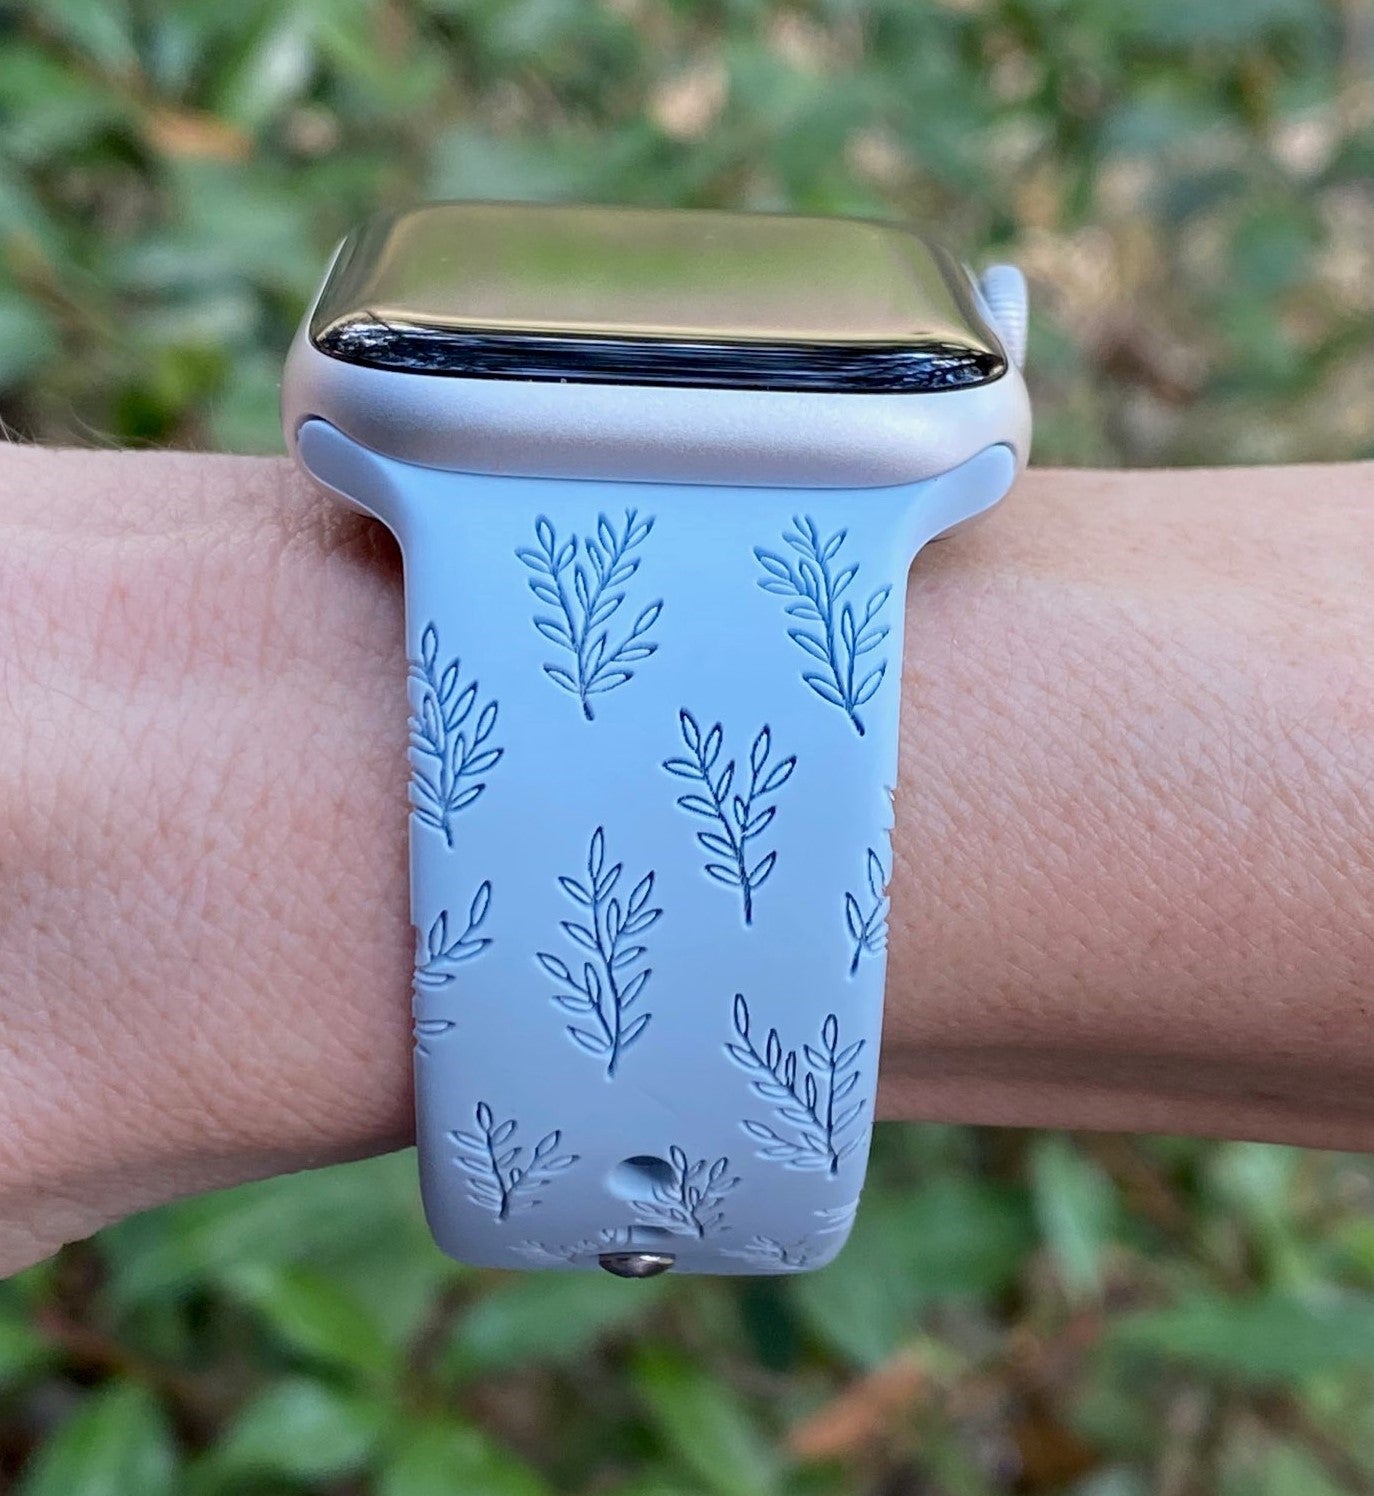 Cute Fall Apple Watch Band